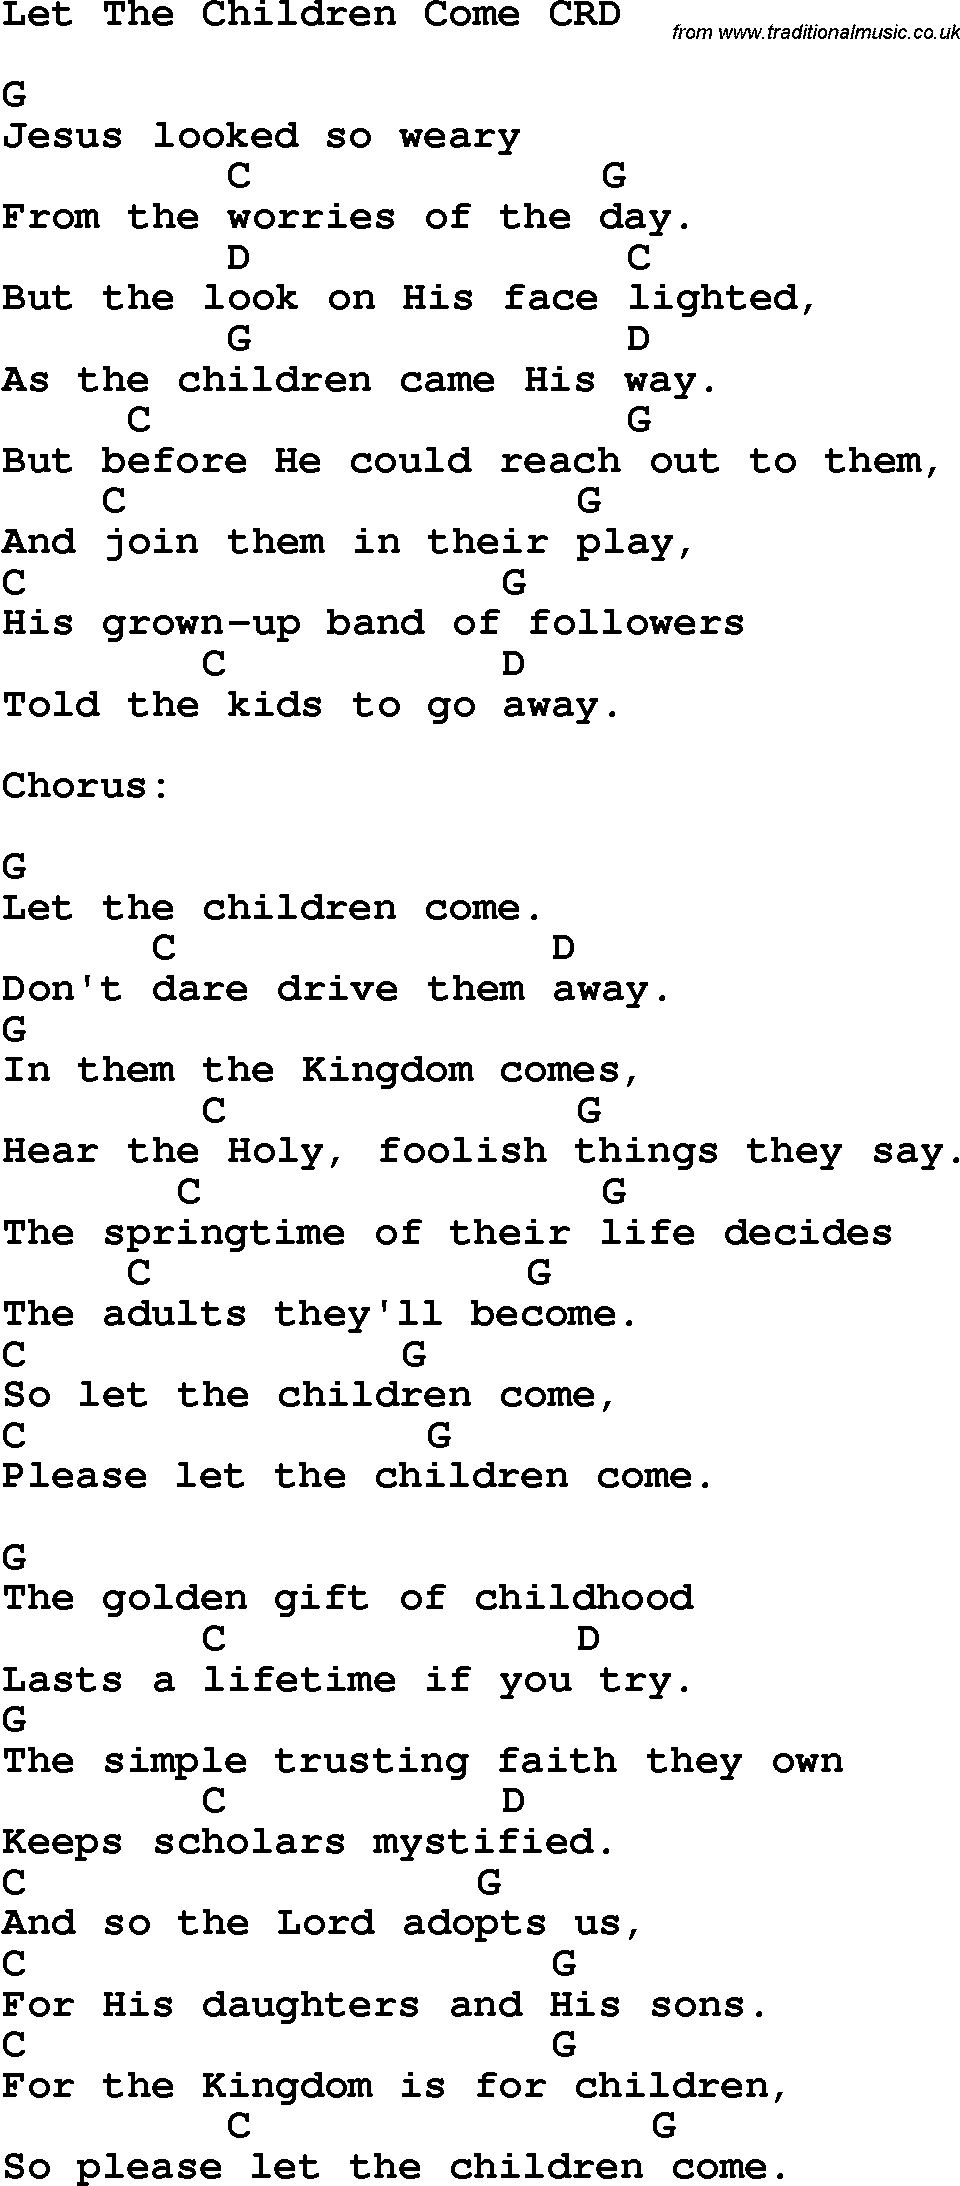 Christian Chlidrens Song Let The Children Come CRD Lyrics & Chords